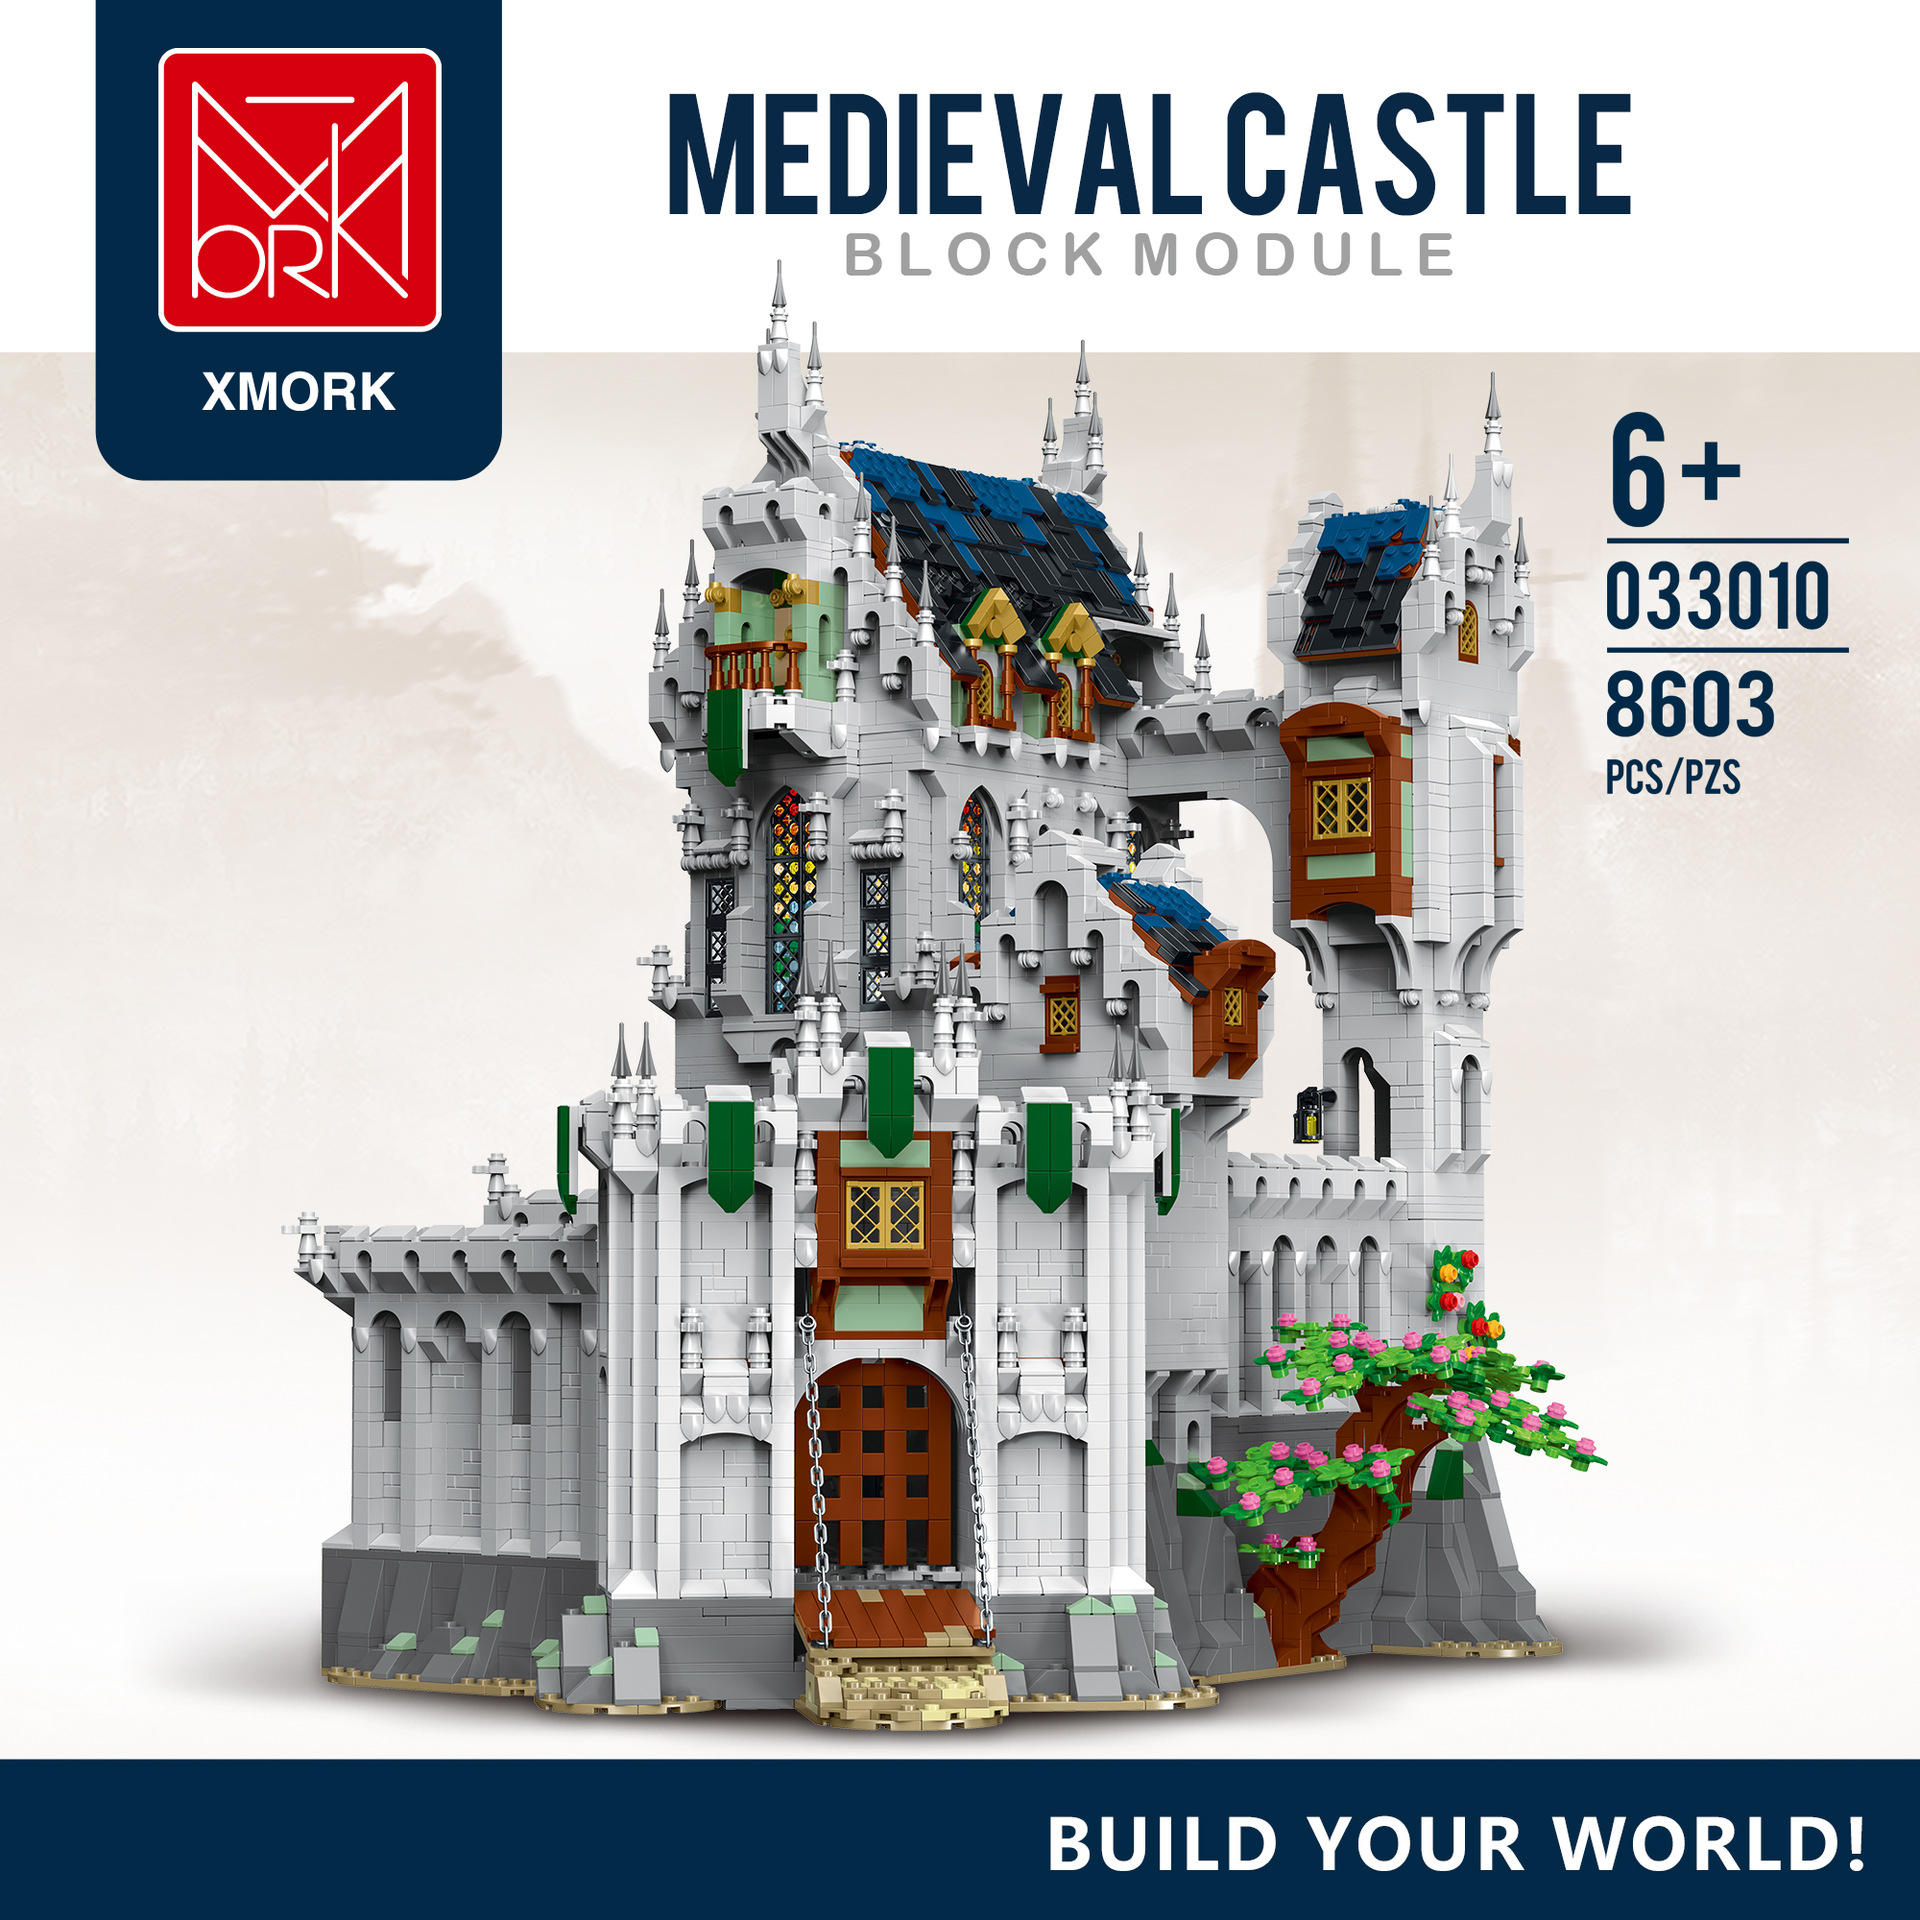 XMork 033010 Medieval Castle